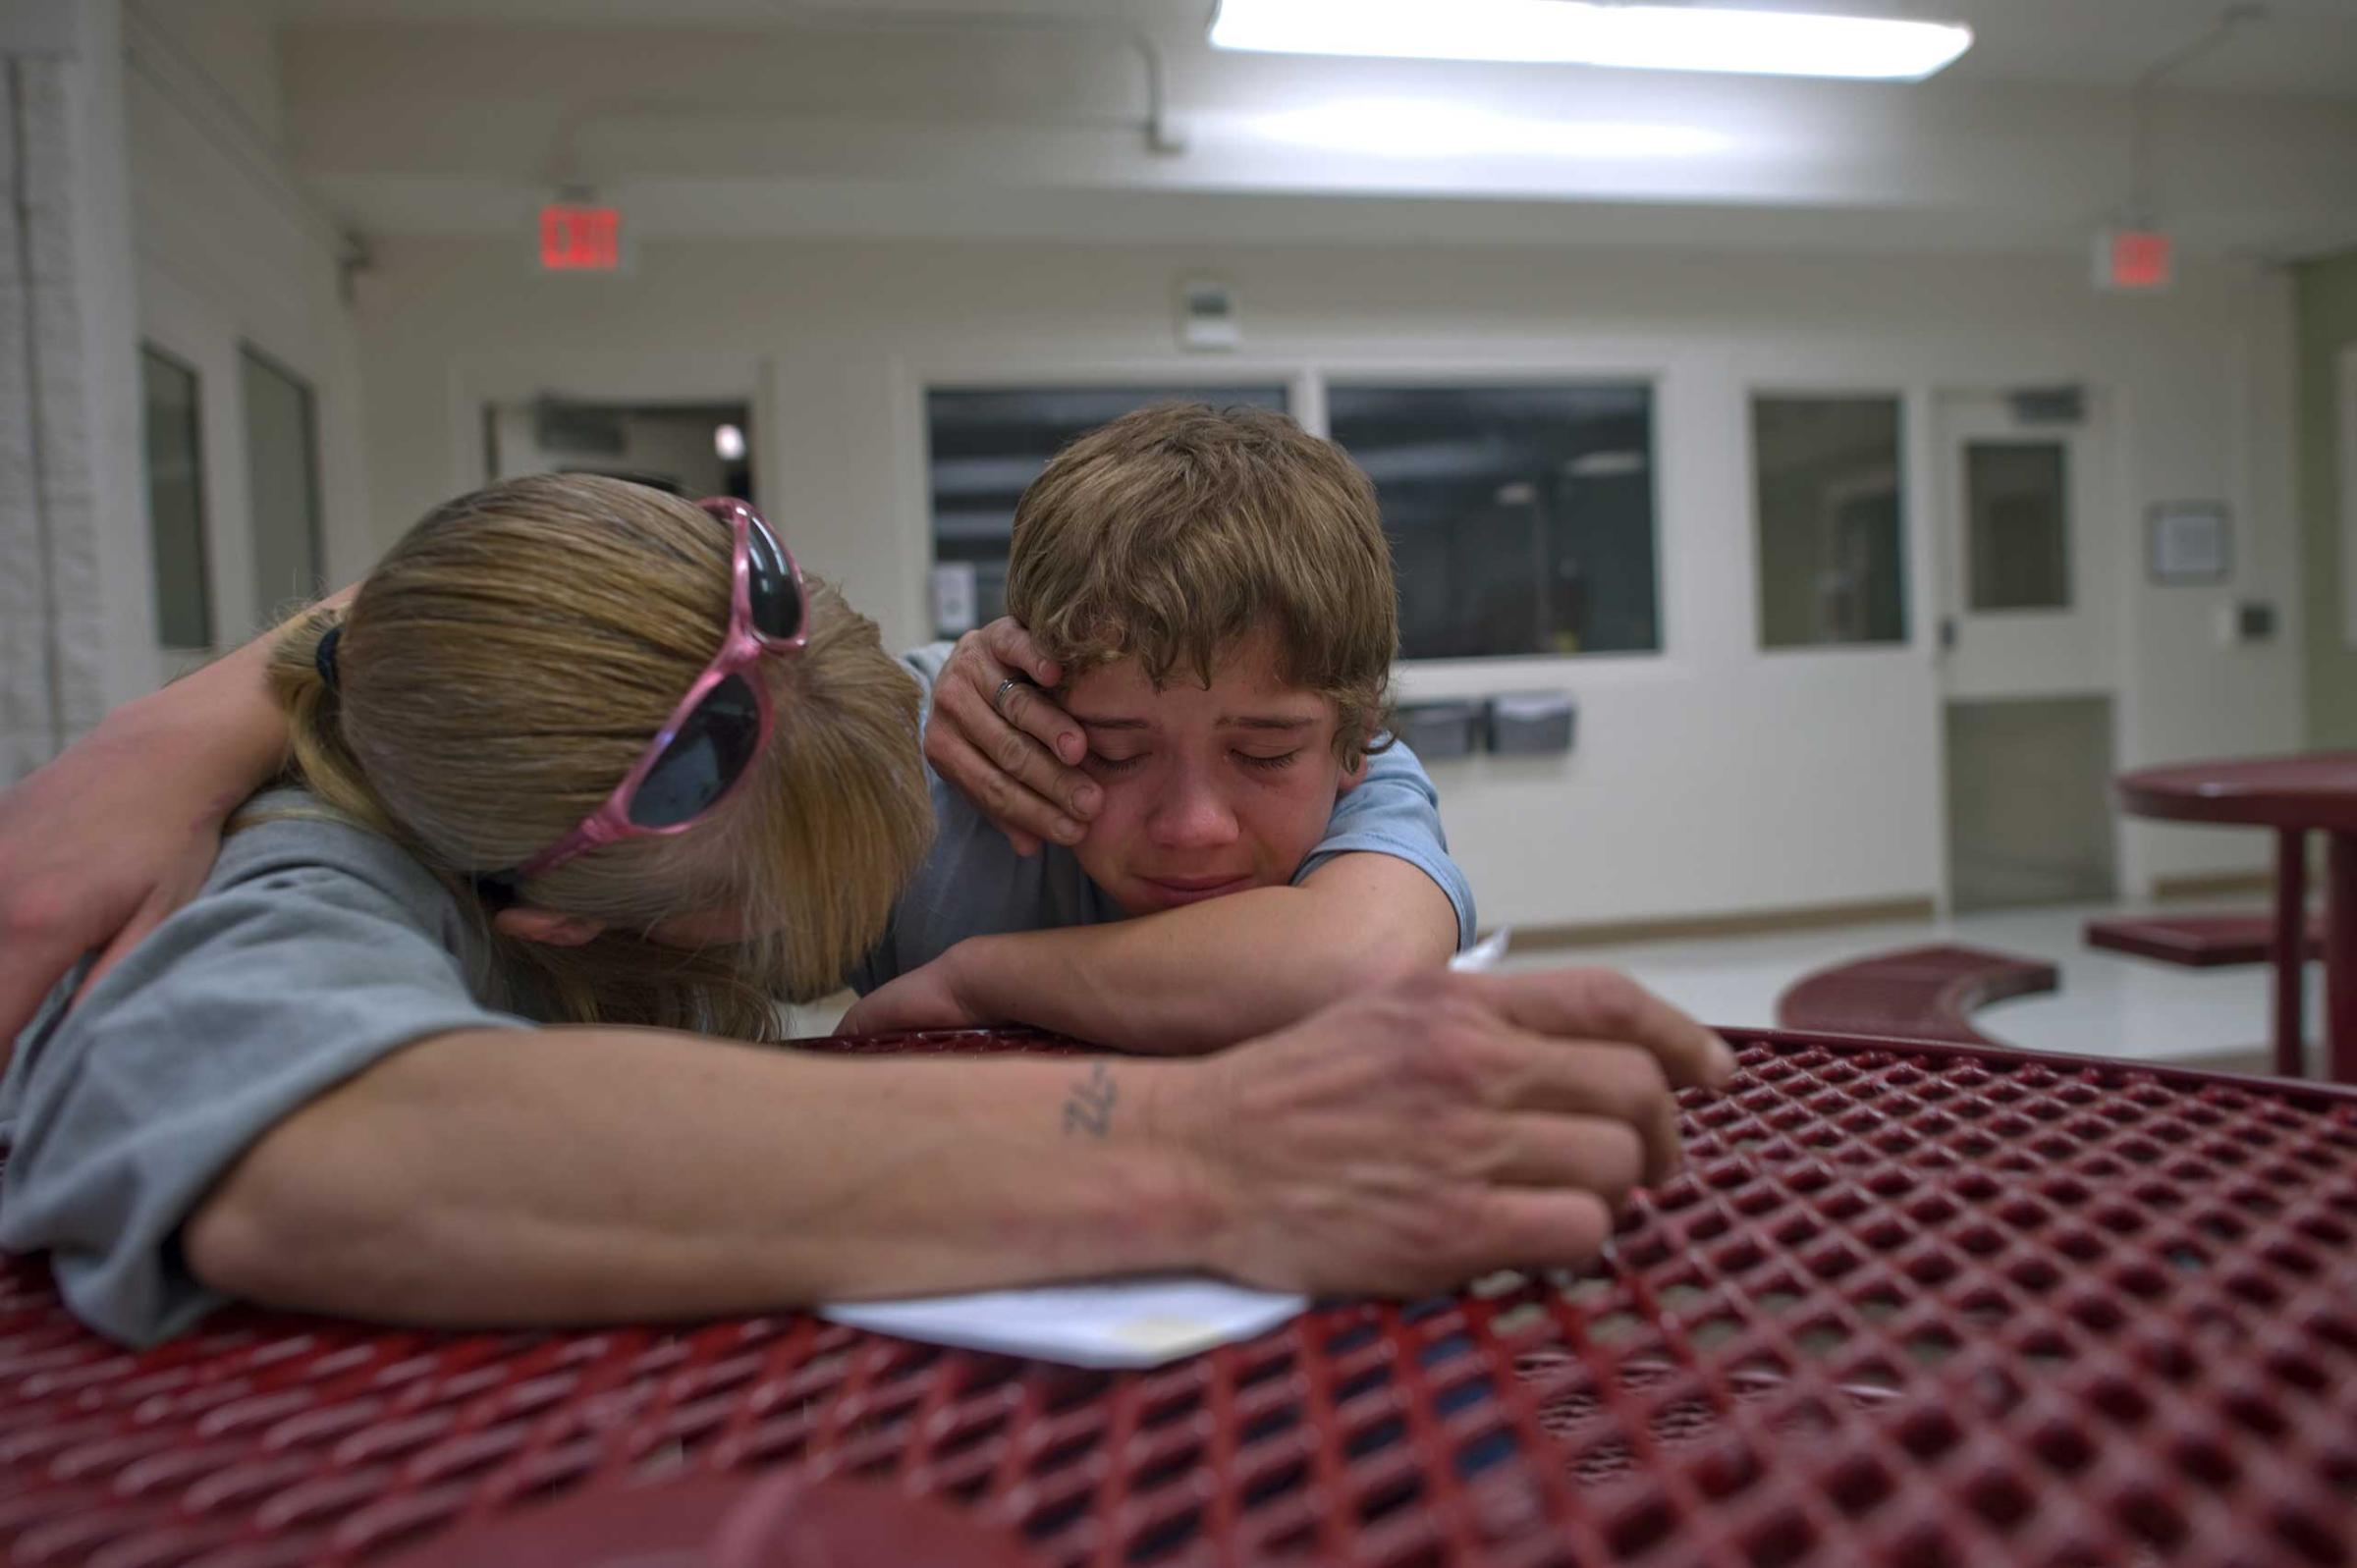 Vinny's mother Eve comforts him during visitation at the detention center.